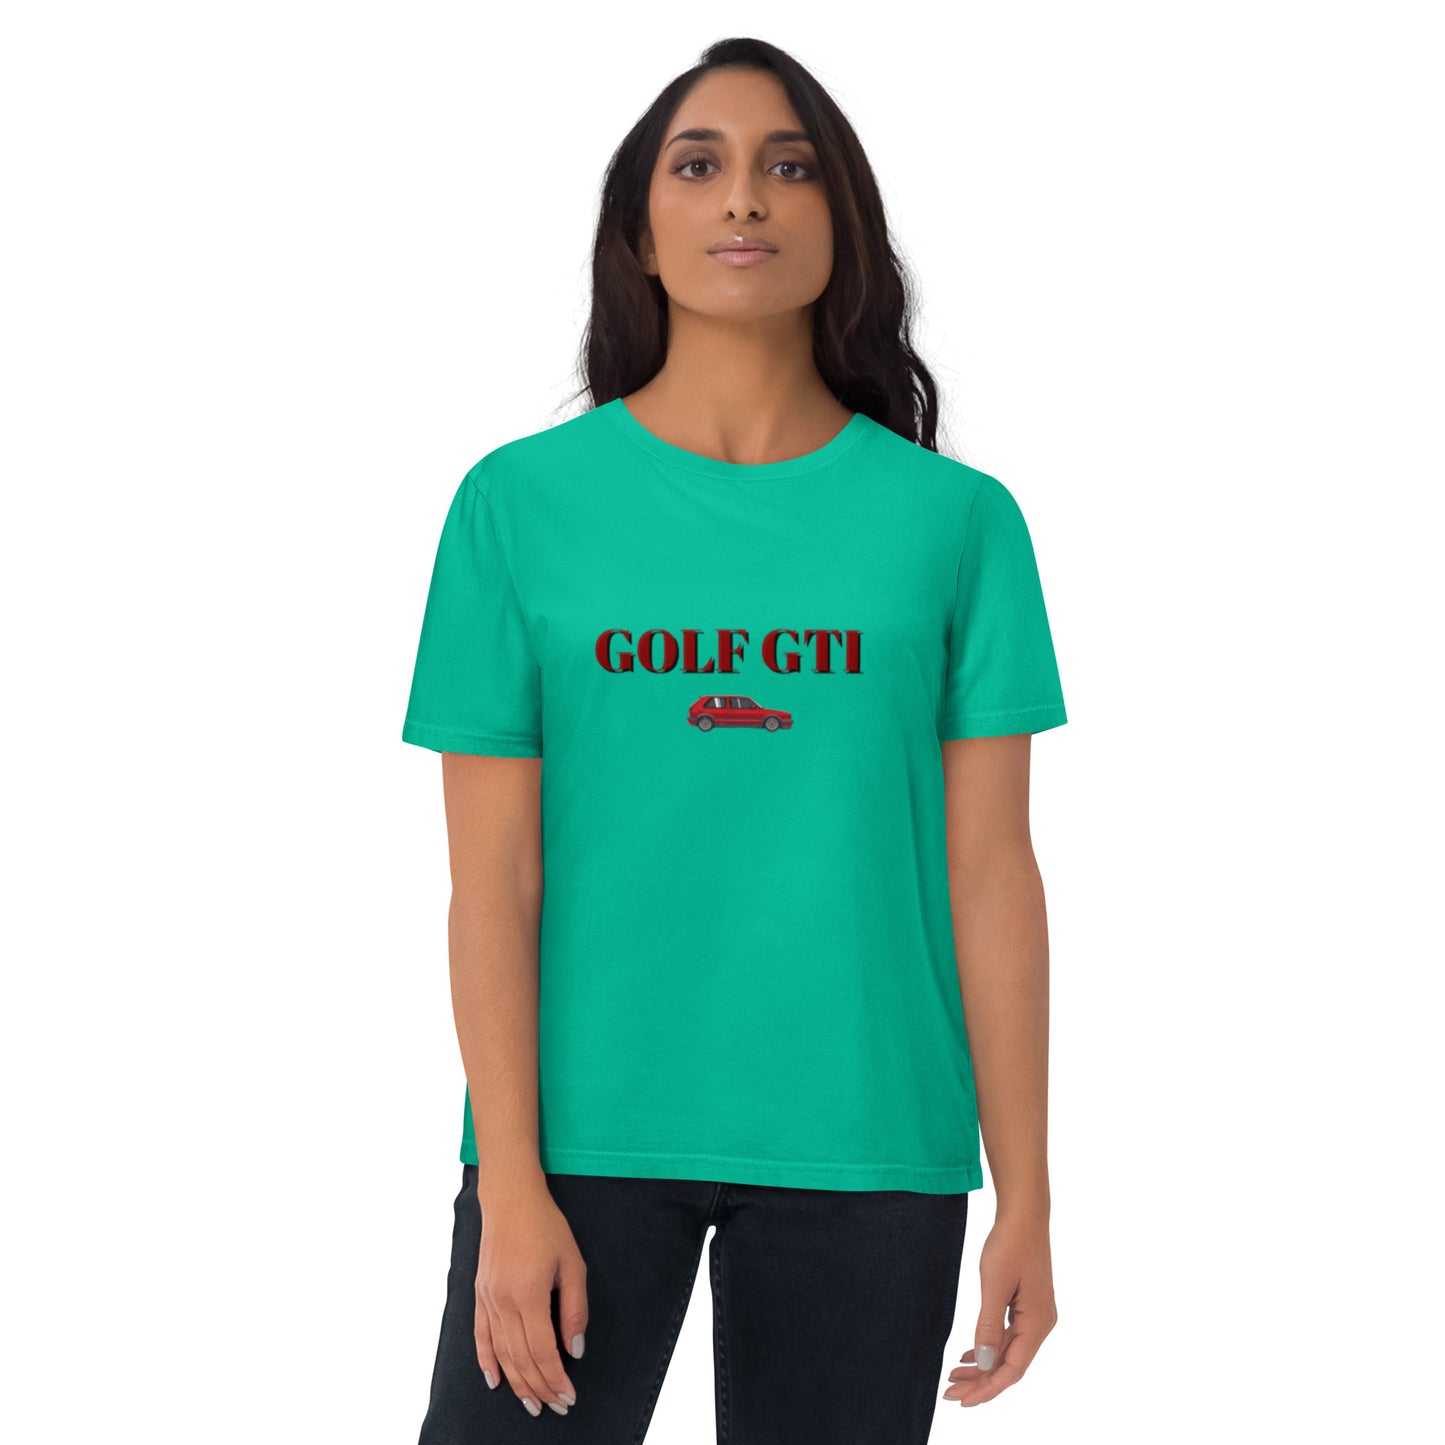 Golf 2 GTI T-Shirt